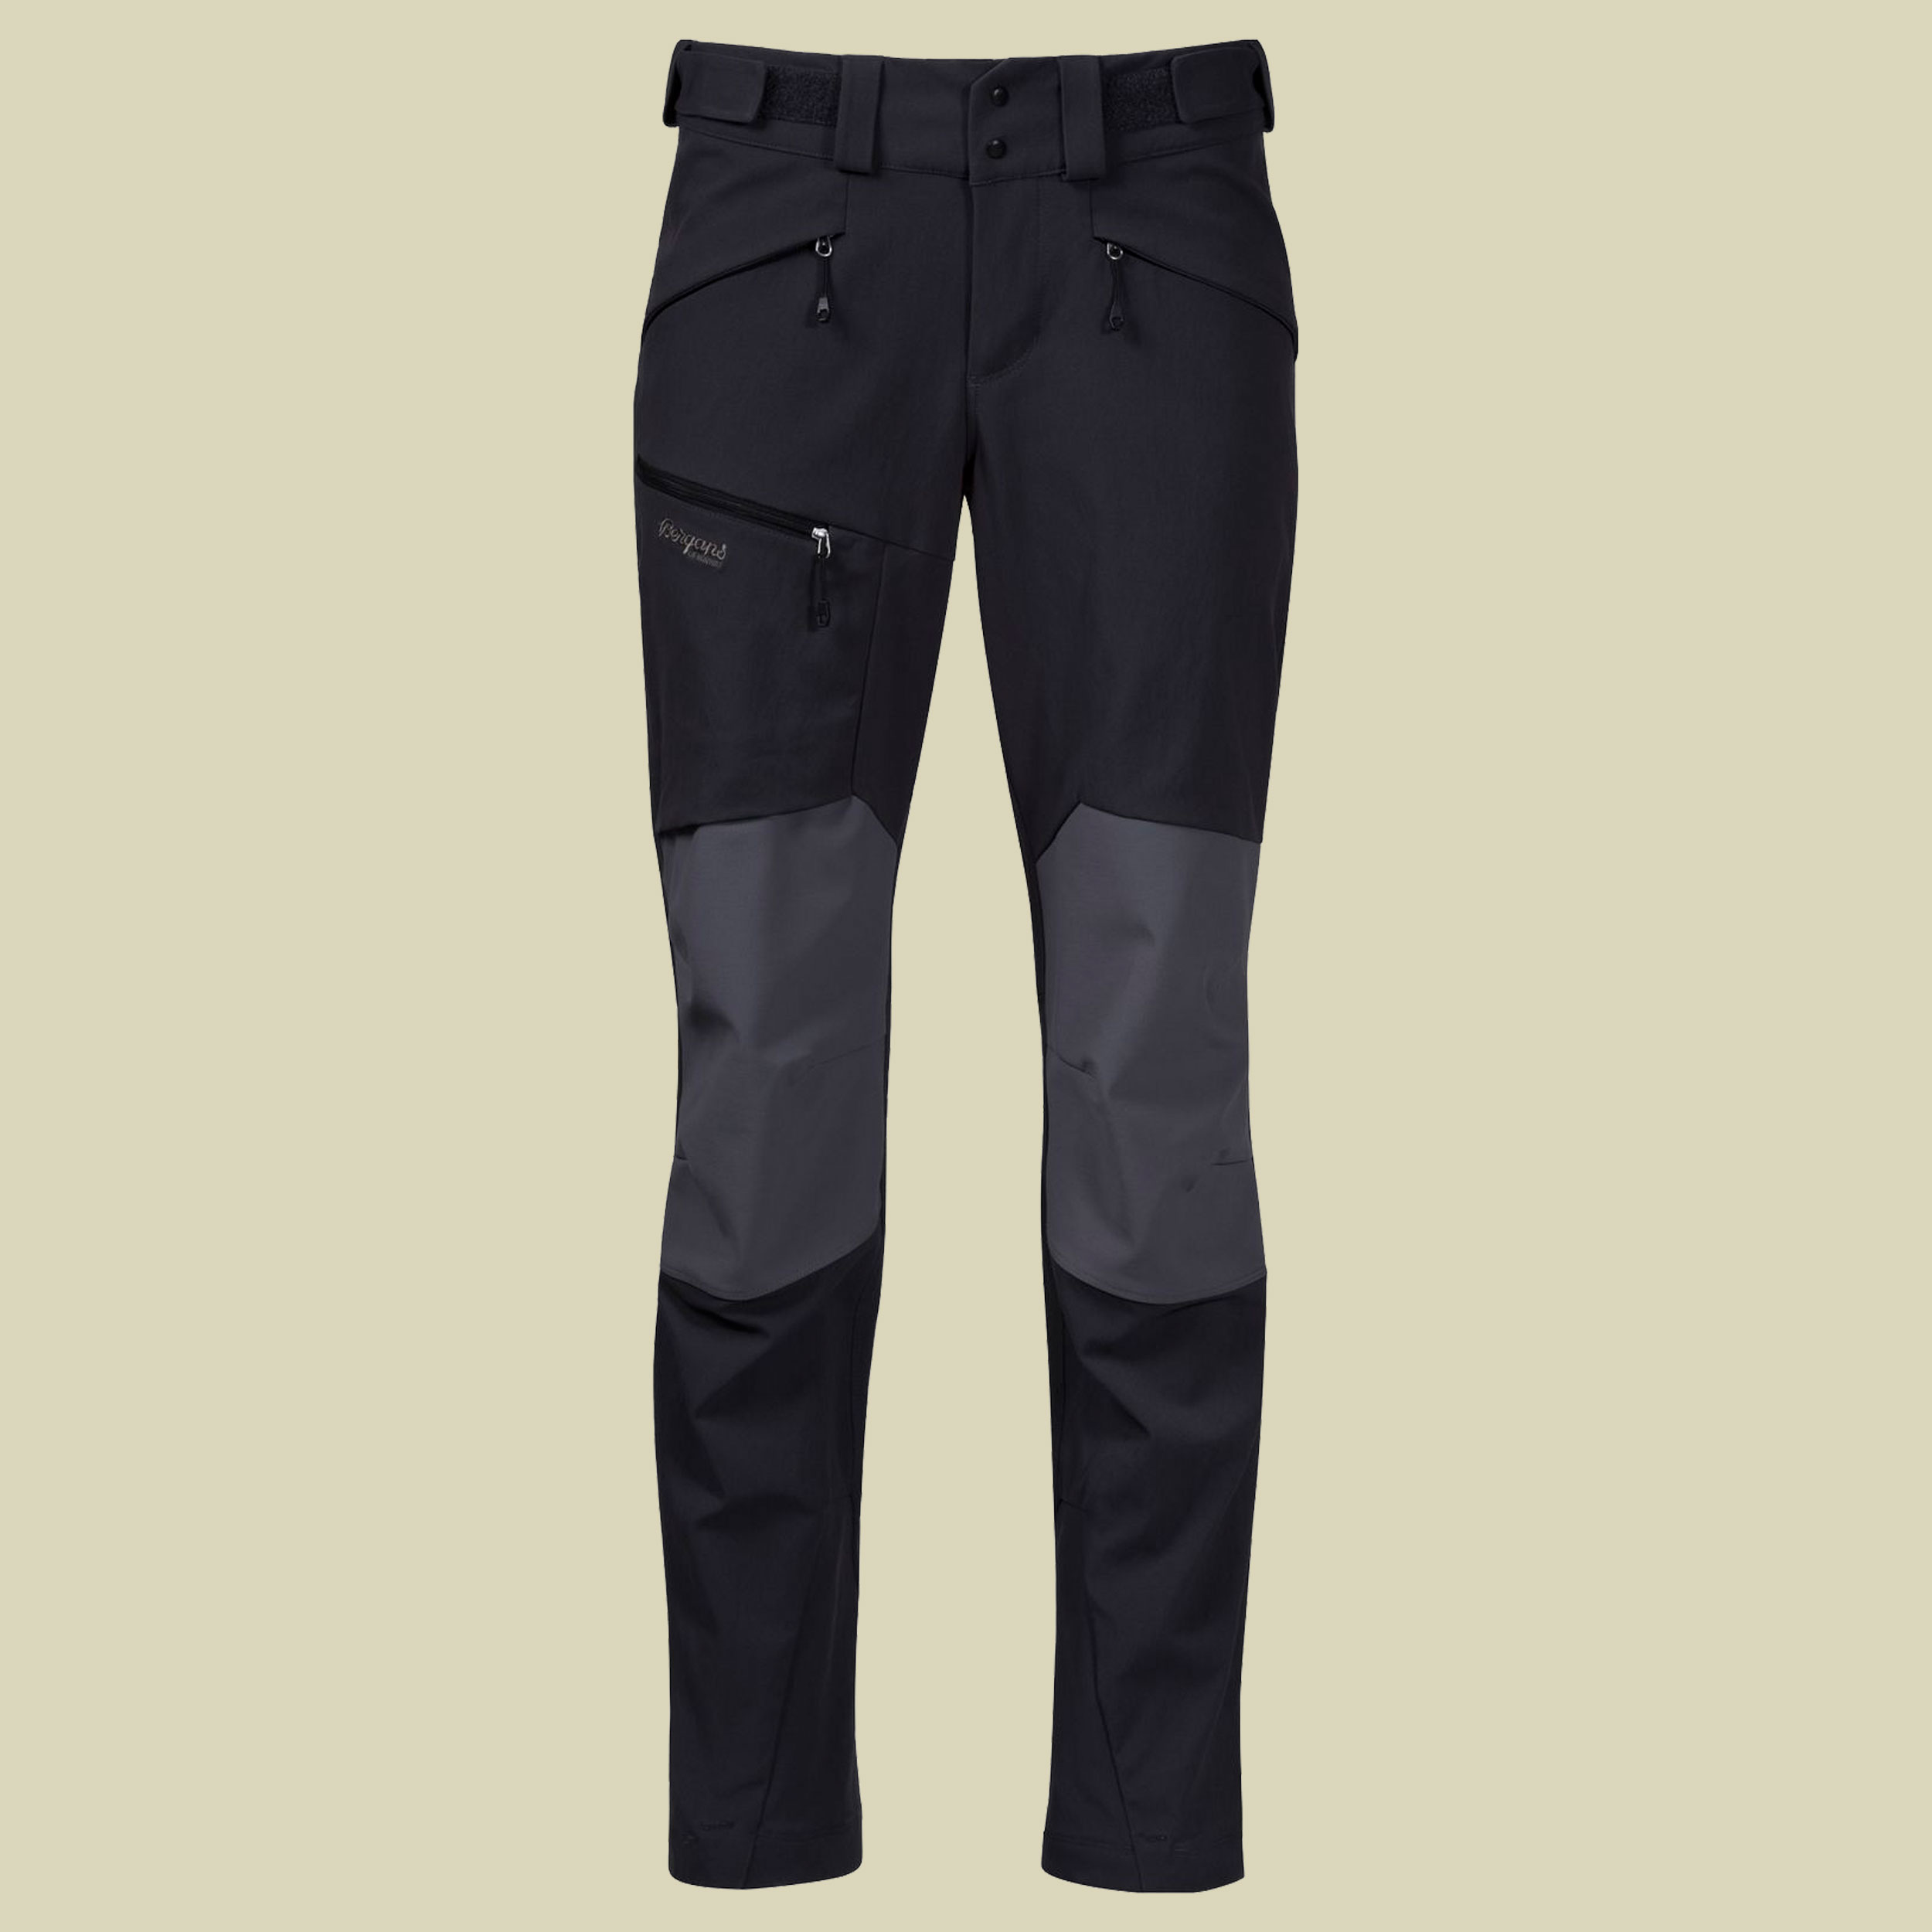 Rabot 365 Hybrid Pants Women Größe M Farbe solid charcoal/solid dark grey/black